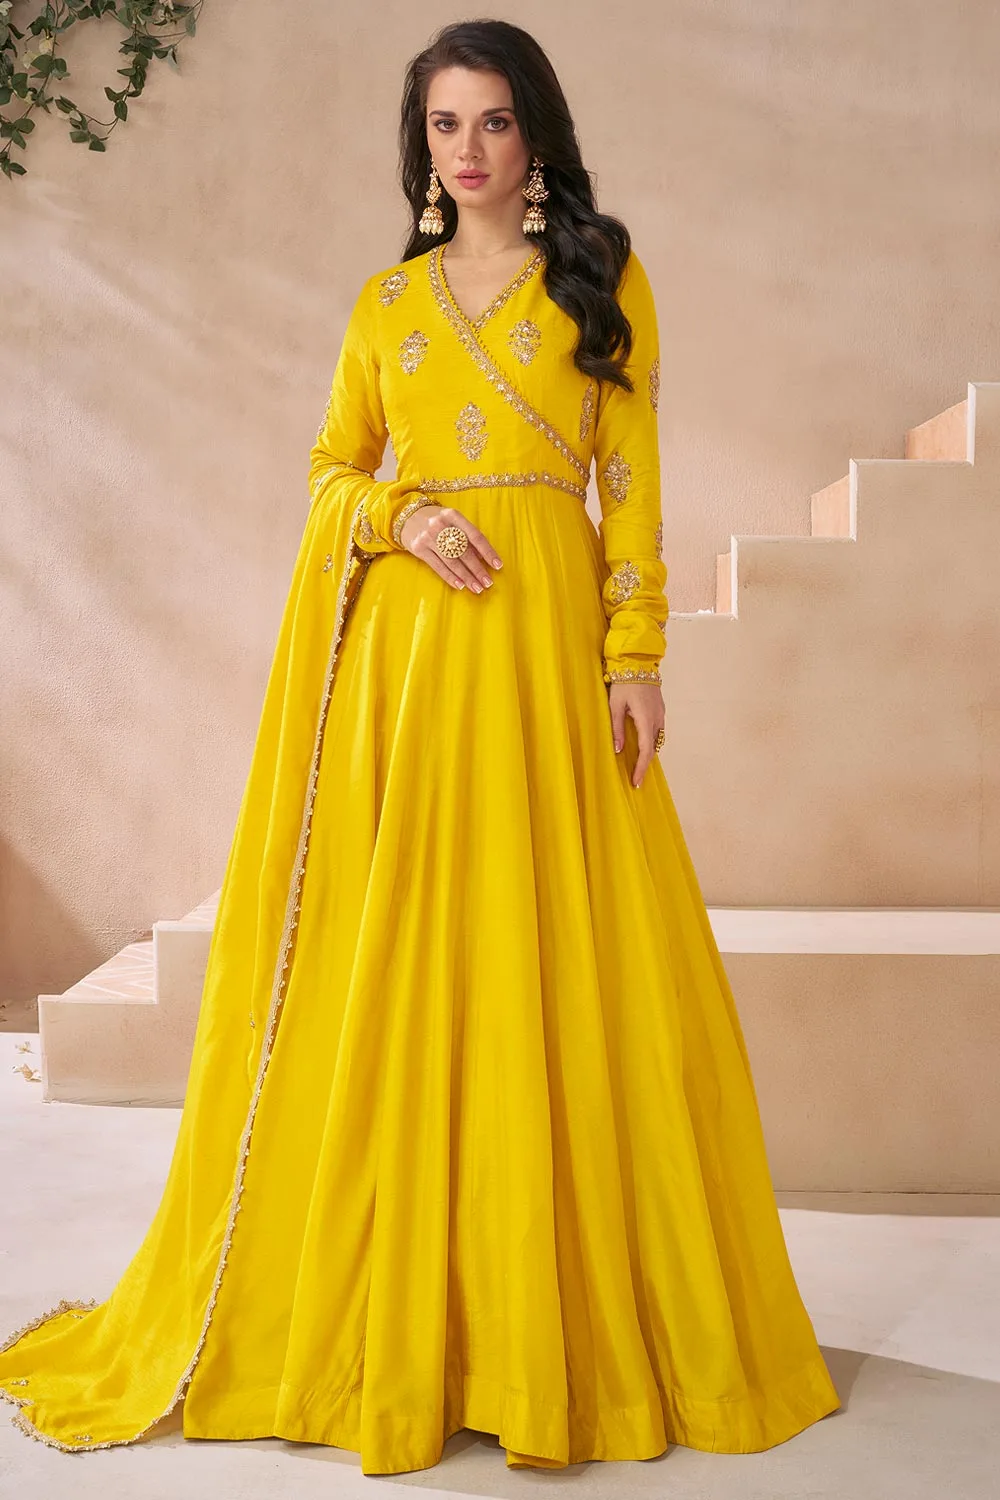 Sunshine Radiance: Yellow Premium Silk Embroidered Anarkali Suit Ensemble for Mehendi Function